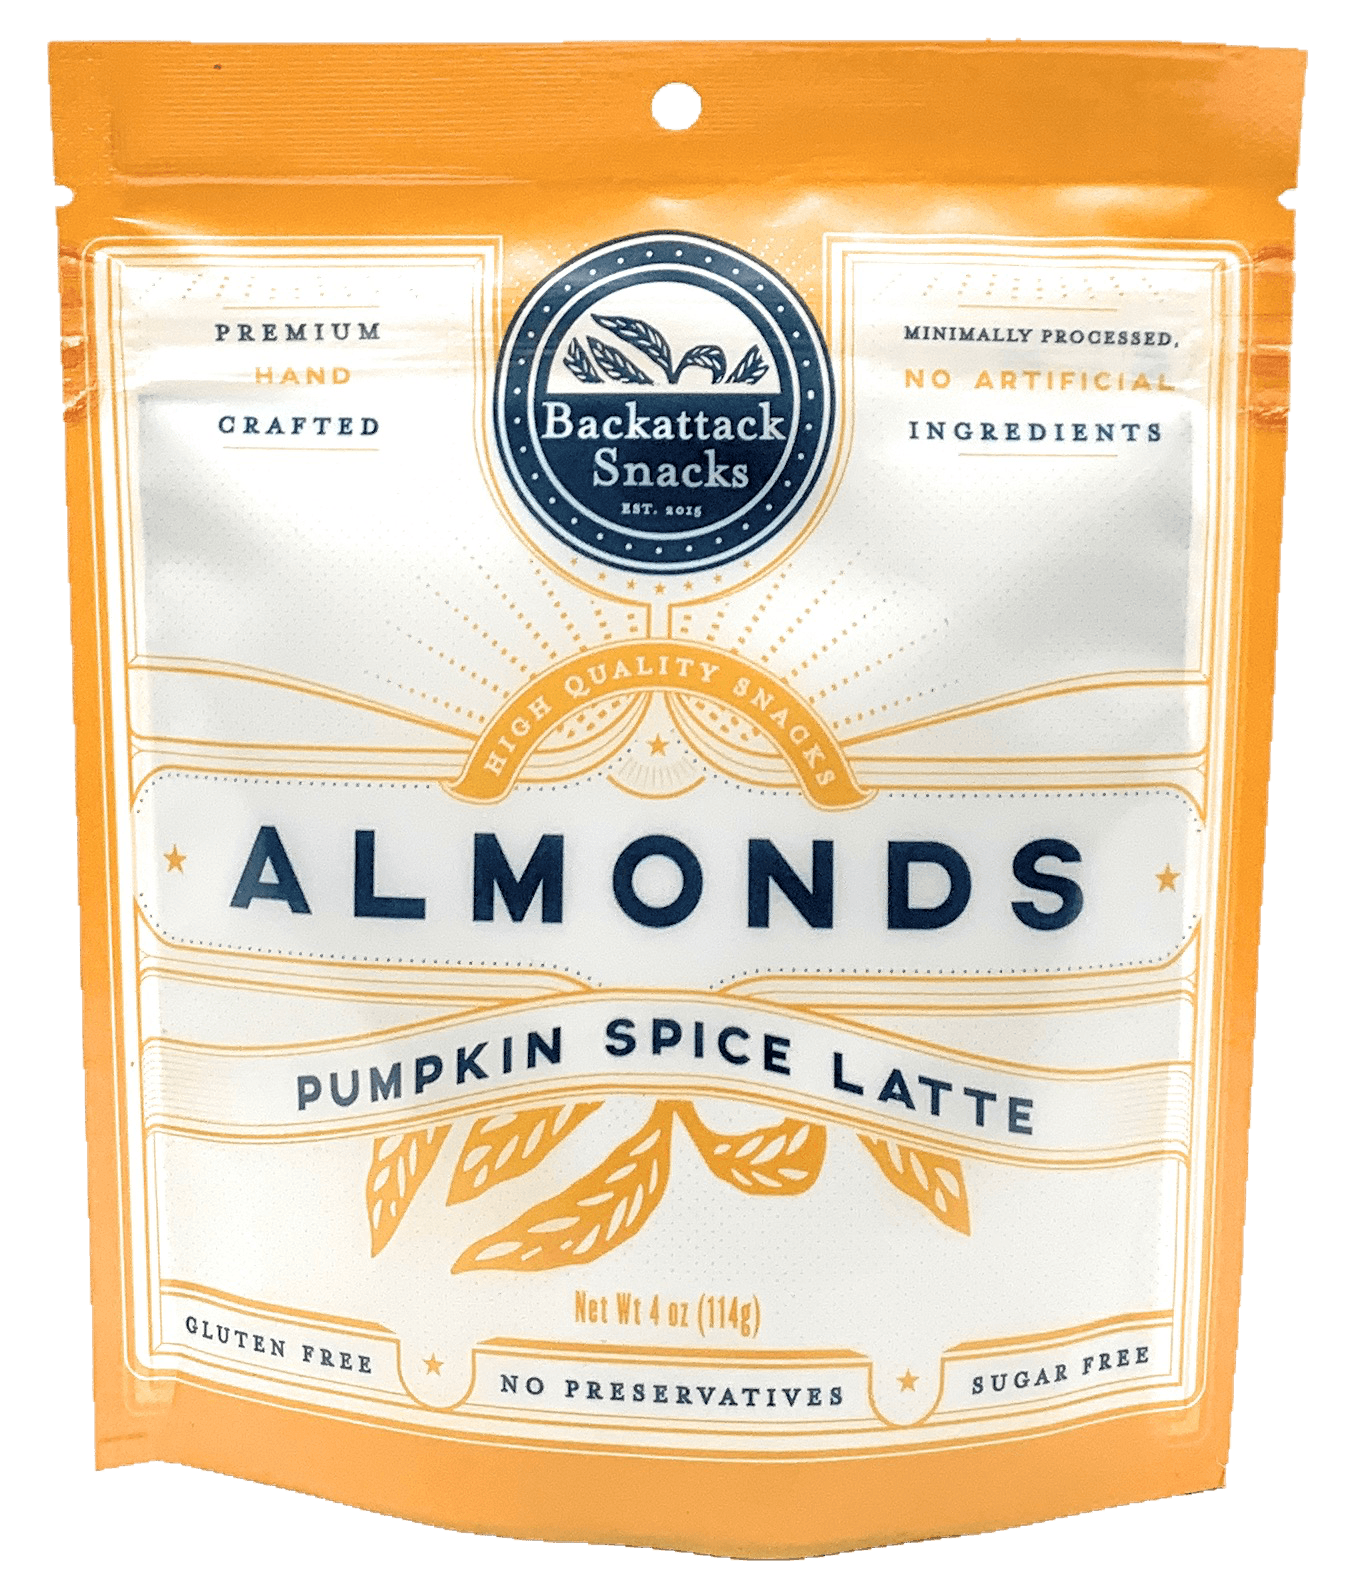 Pumpkin Spice Latte Flavored Almonds (SEASONAL AUG - JAN) - Backattack Snacks 